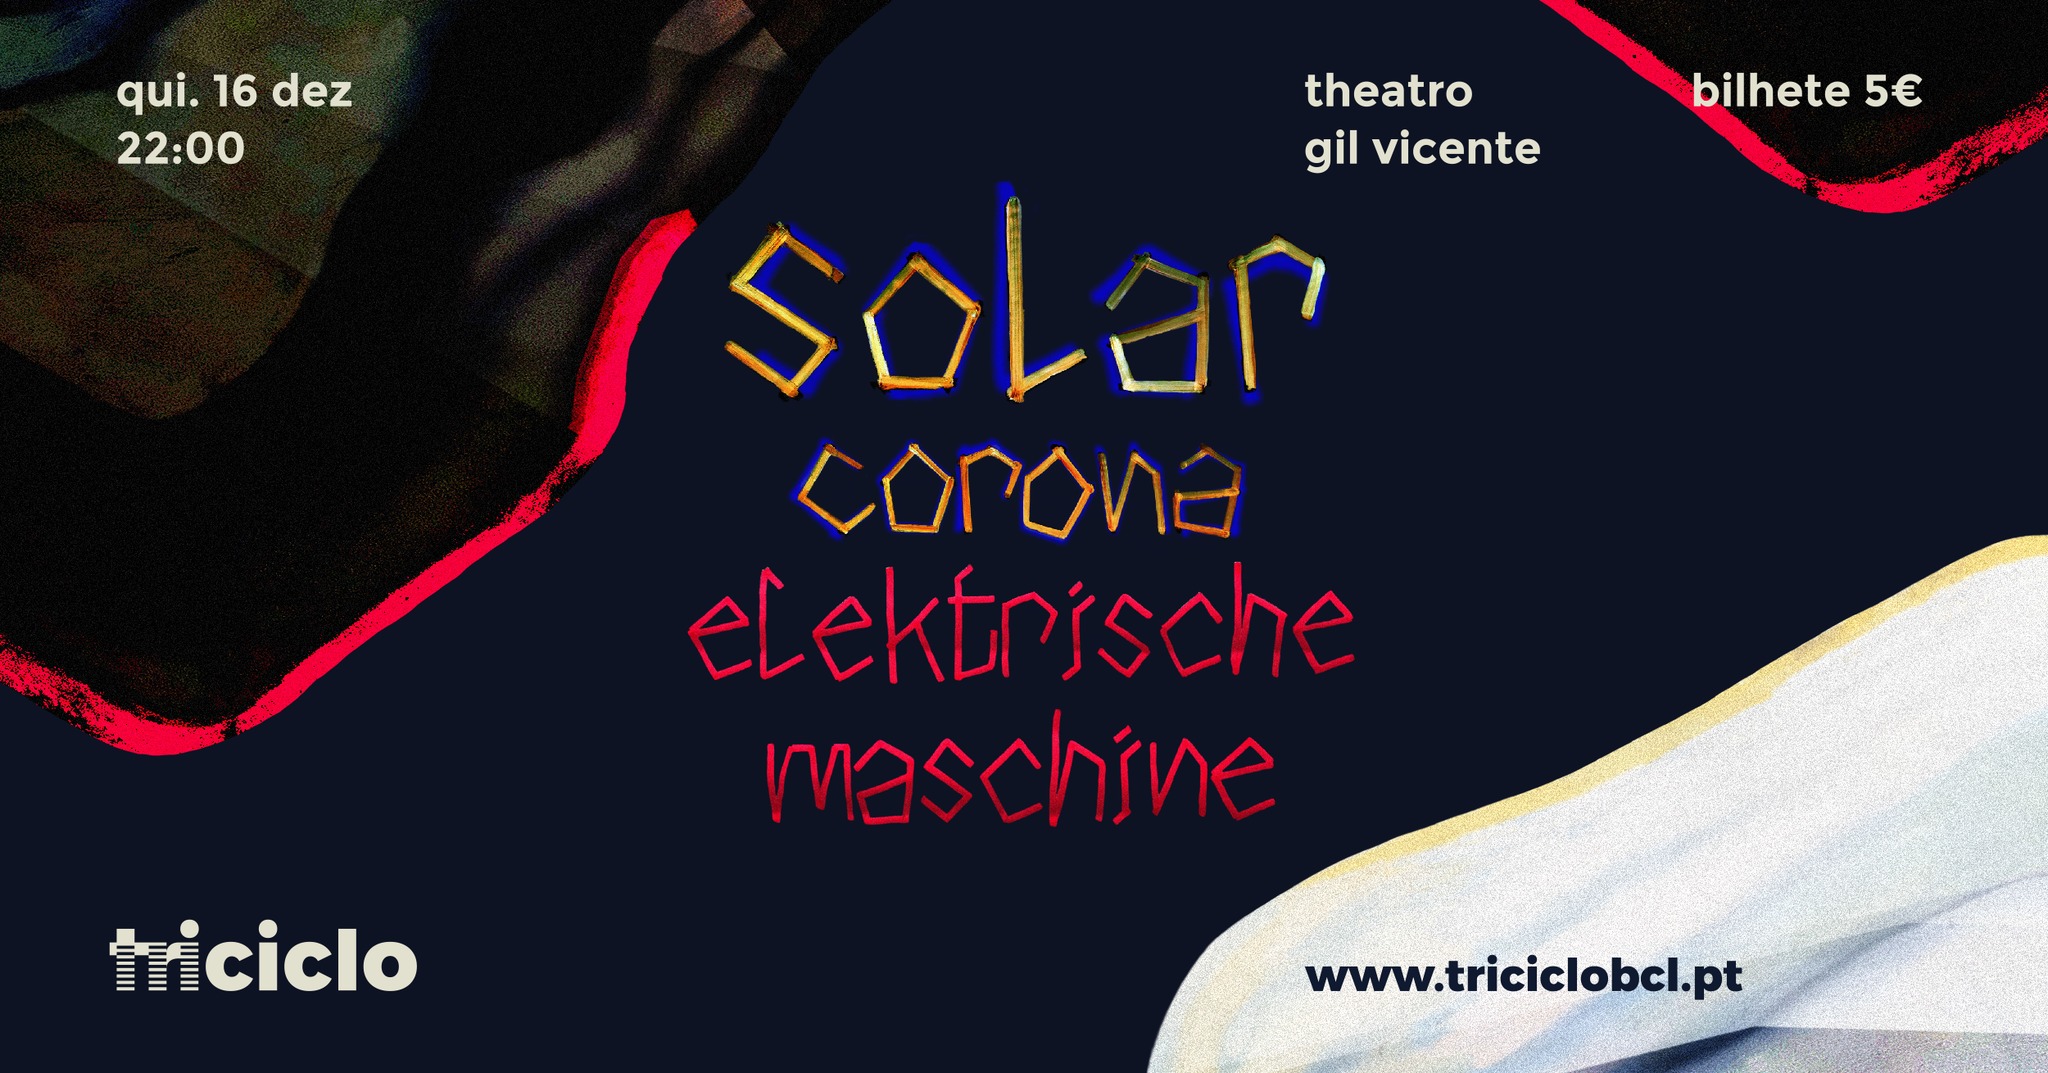 triciclo / solar corona elektrische maschine apresenta lava